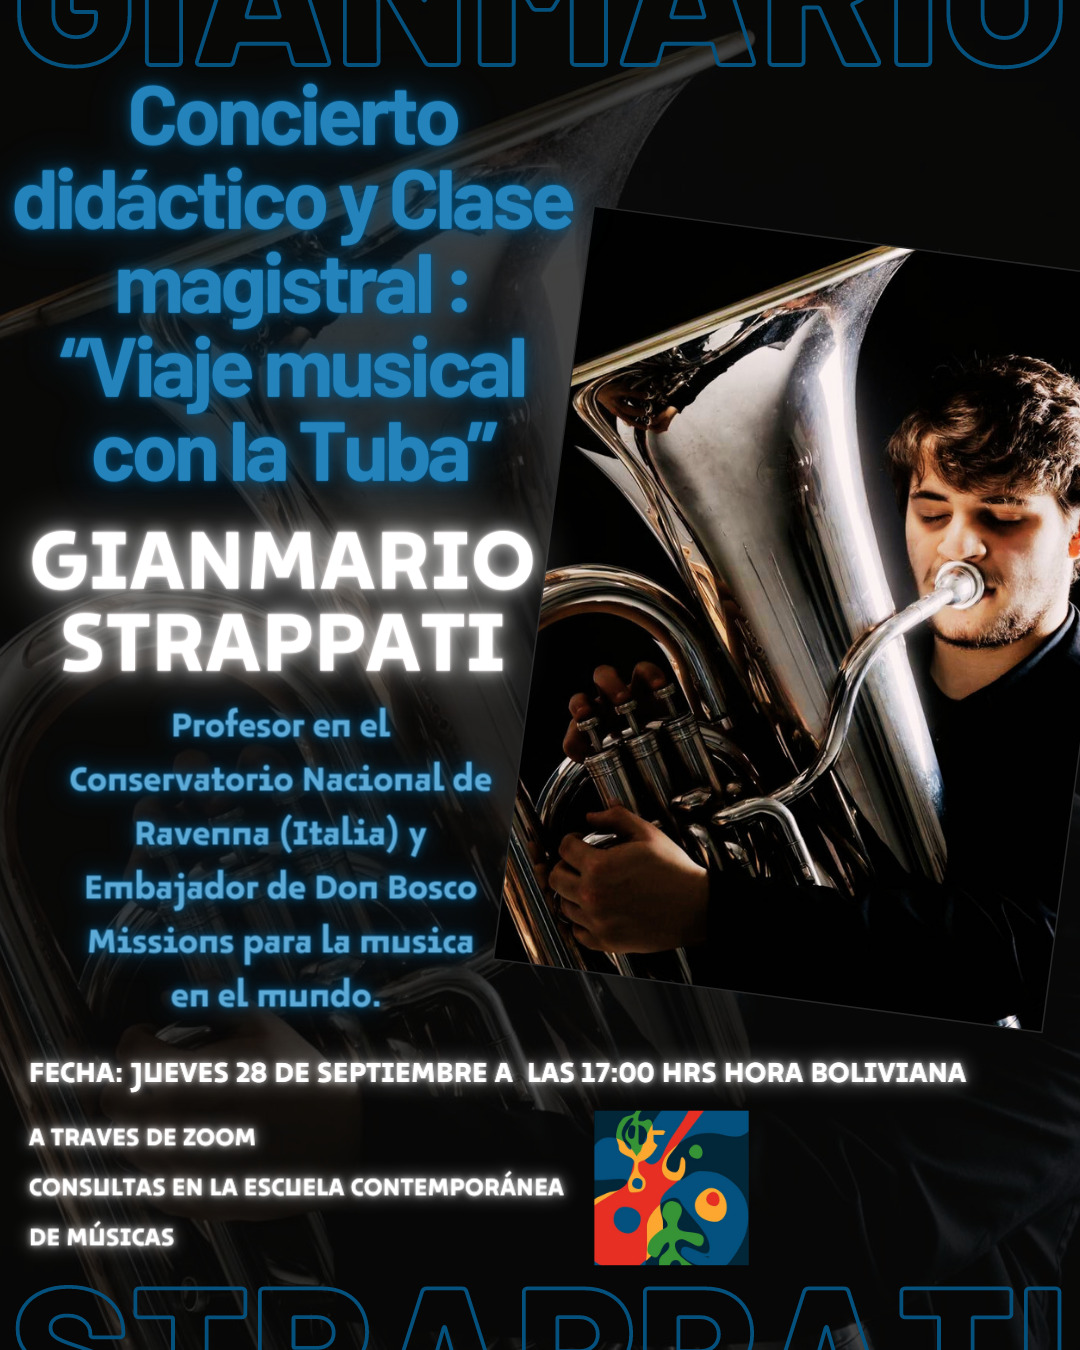 En este momento estás viendo Gianmario Strappati (Tuba) – Profesor del Conservatorio Nacional G. Verdi de Ravenna (Italia), Institucion de alta cultura.